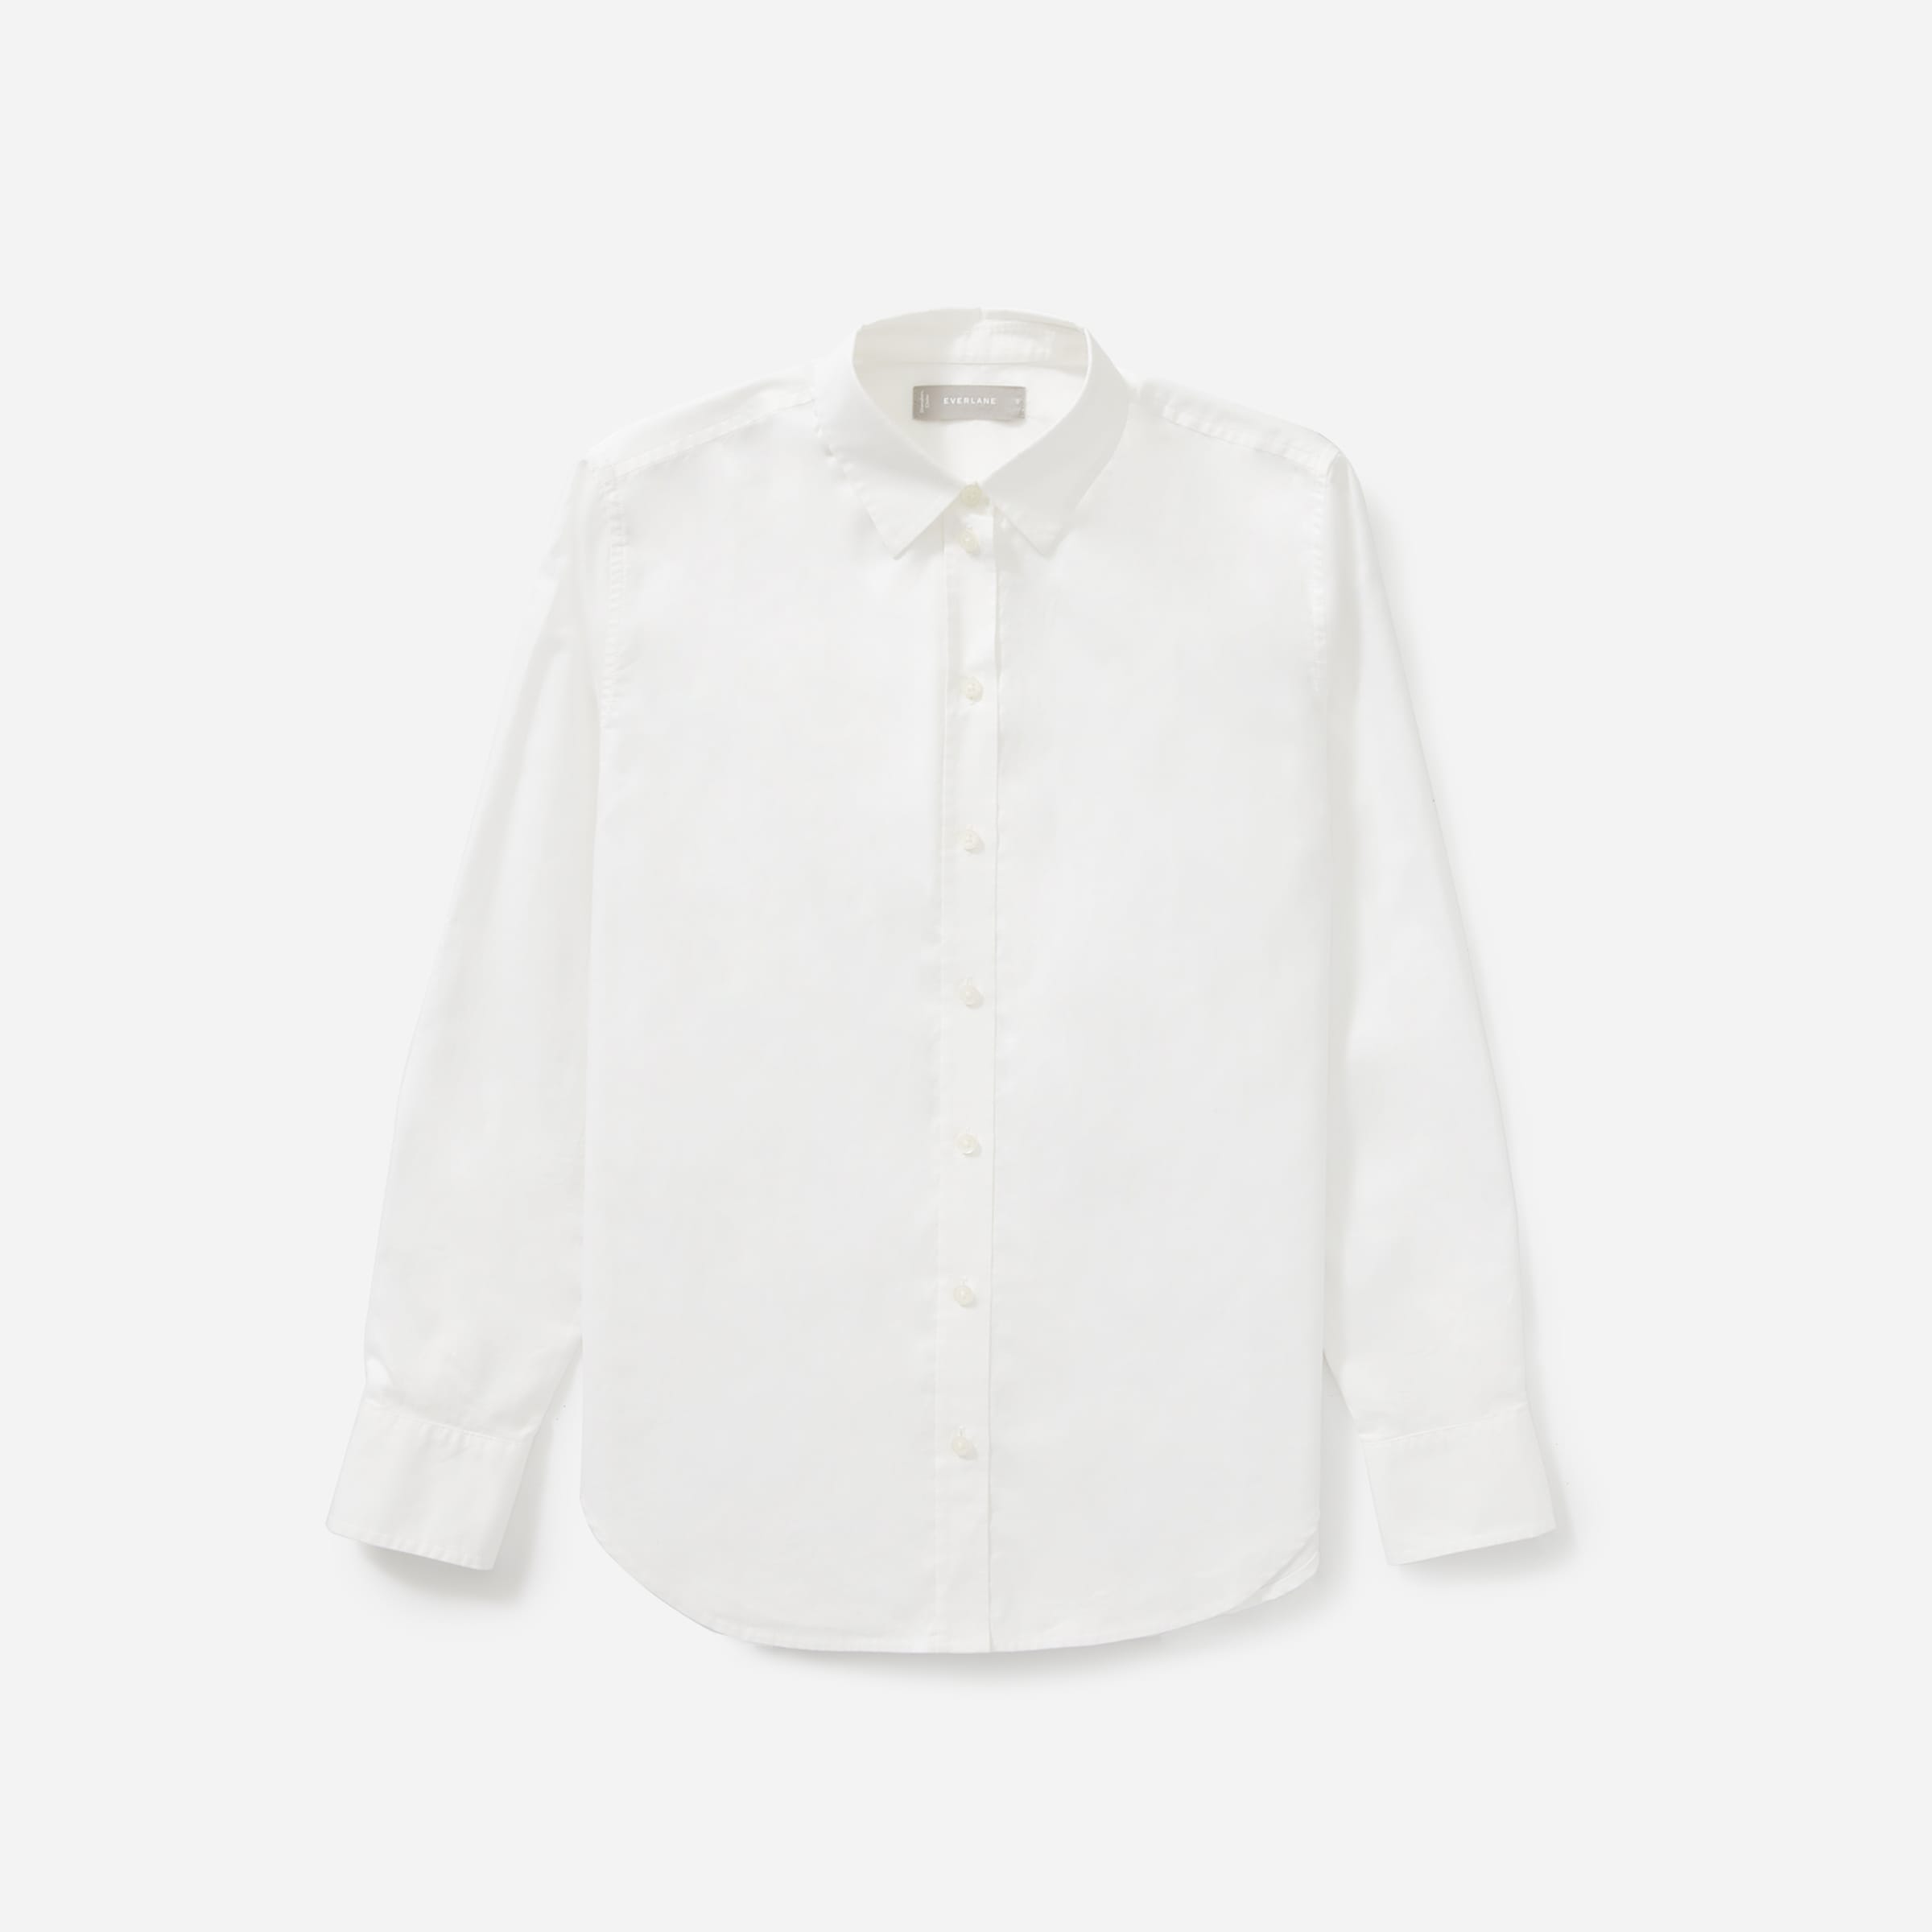 Vetinee Women's Brilliant White Button Down Denim Shirt Collared